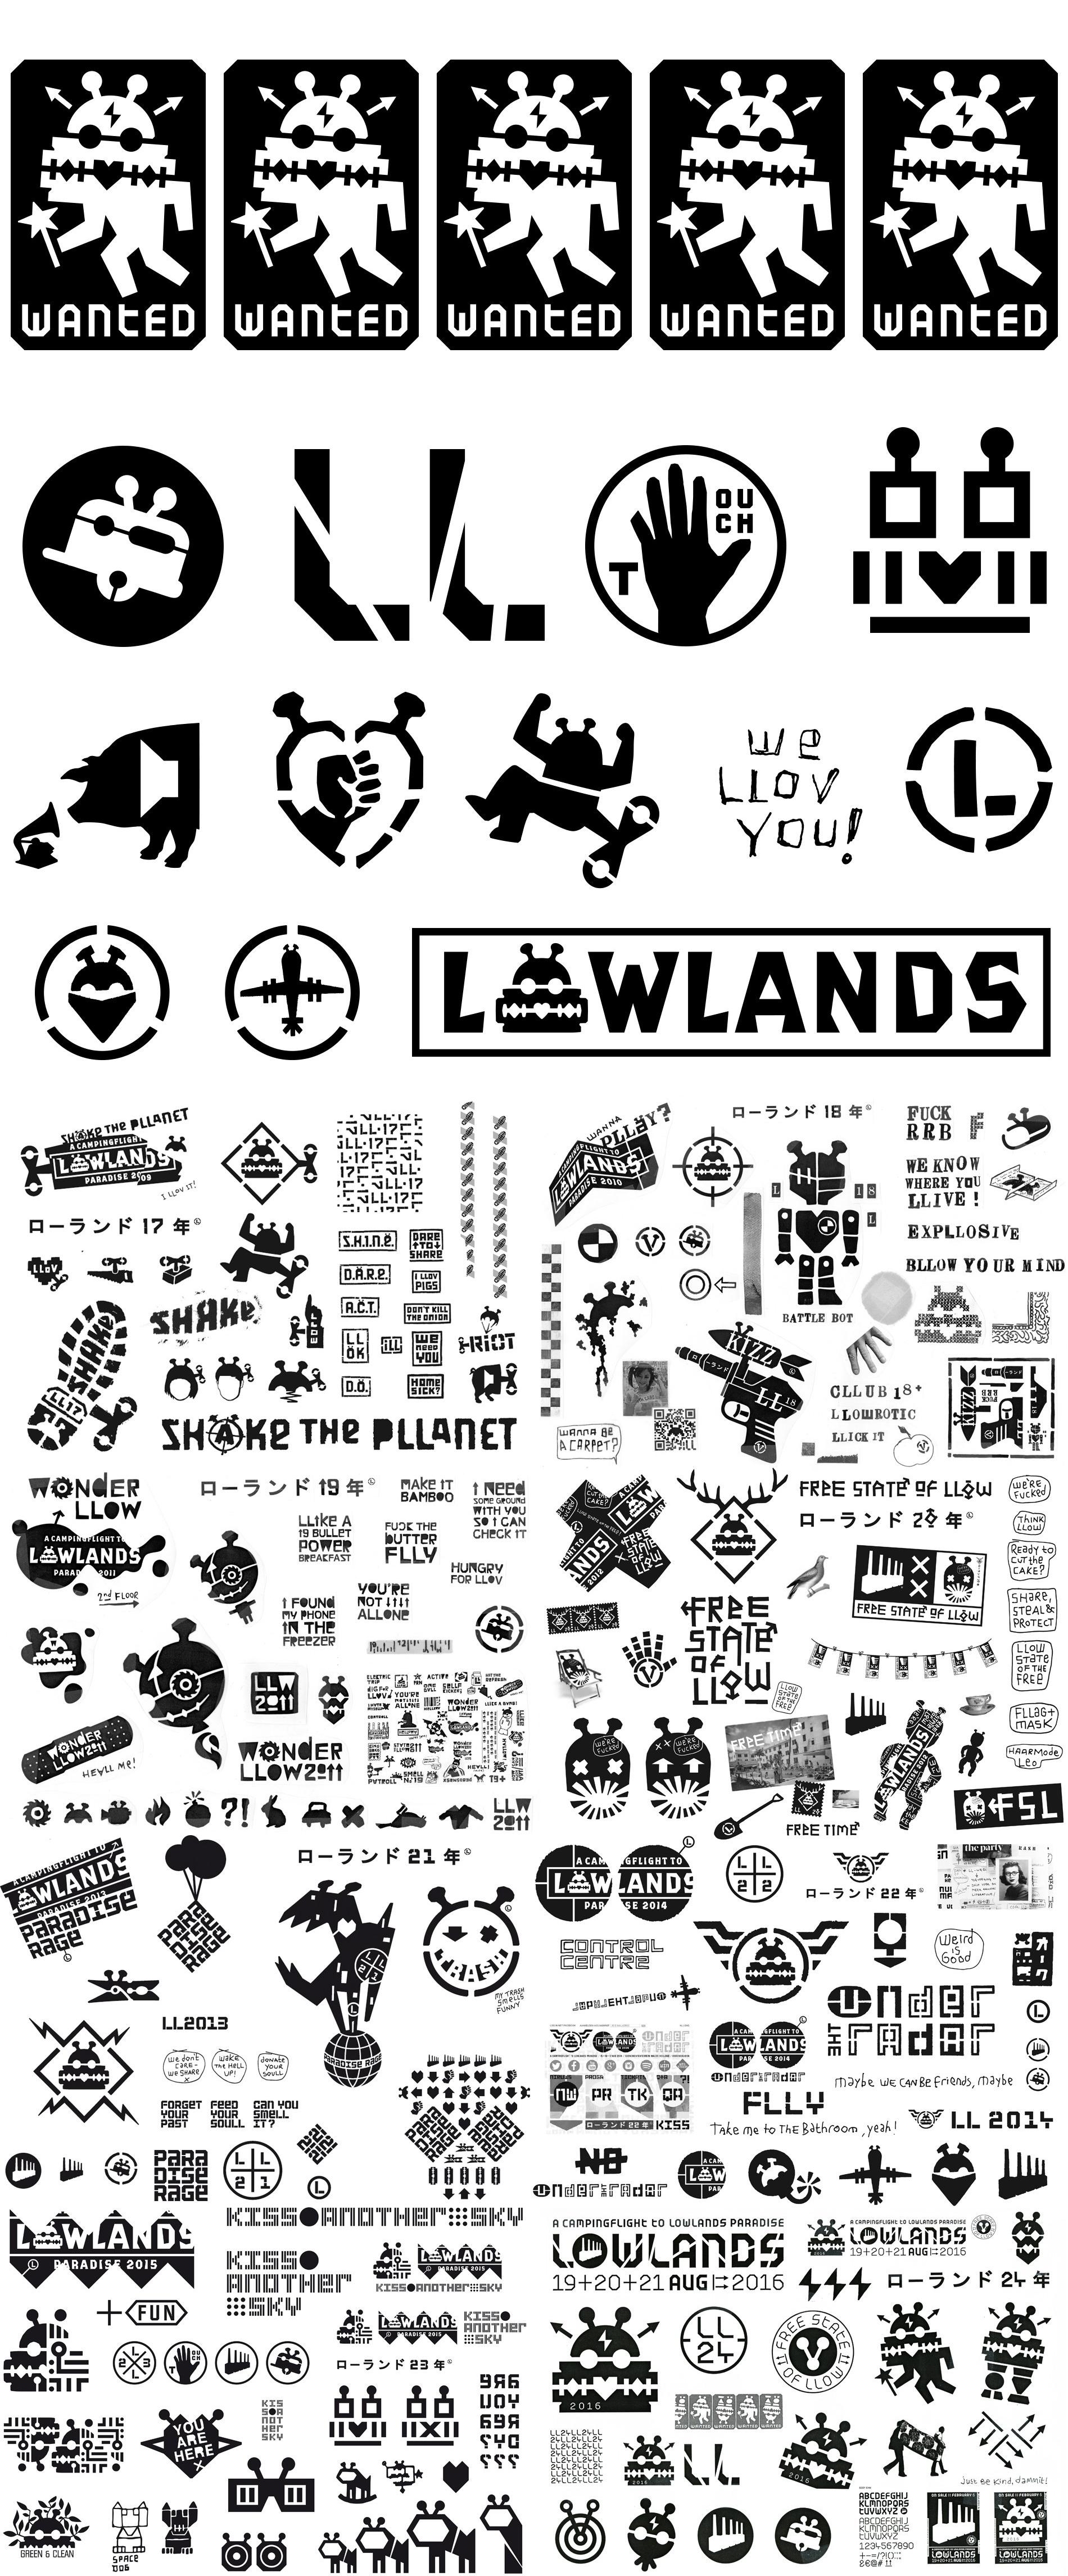 Lowlands Festival Logo Design - Peter te Bos